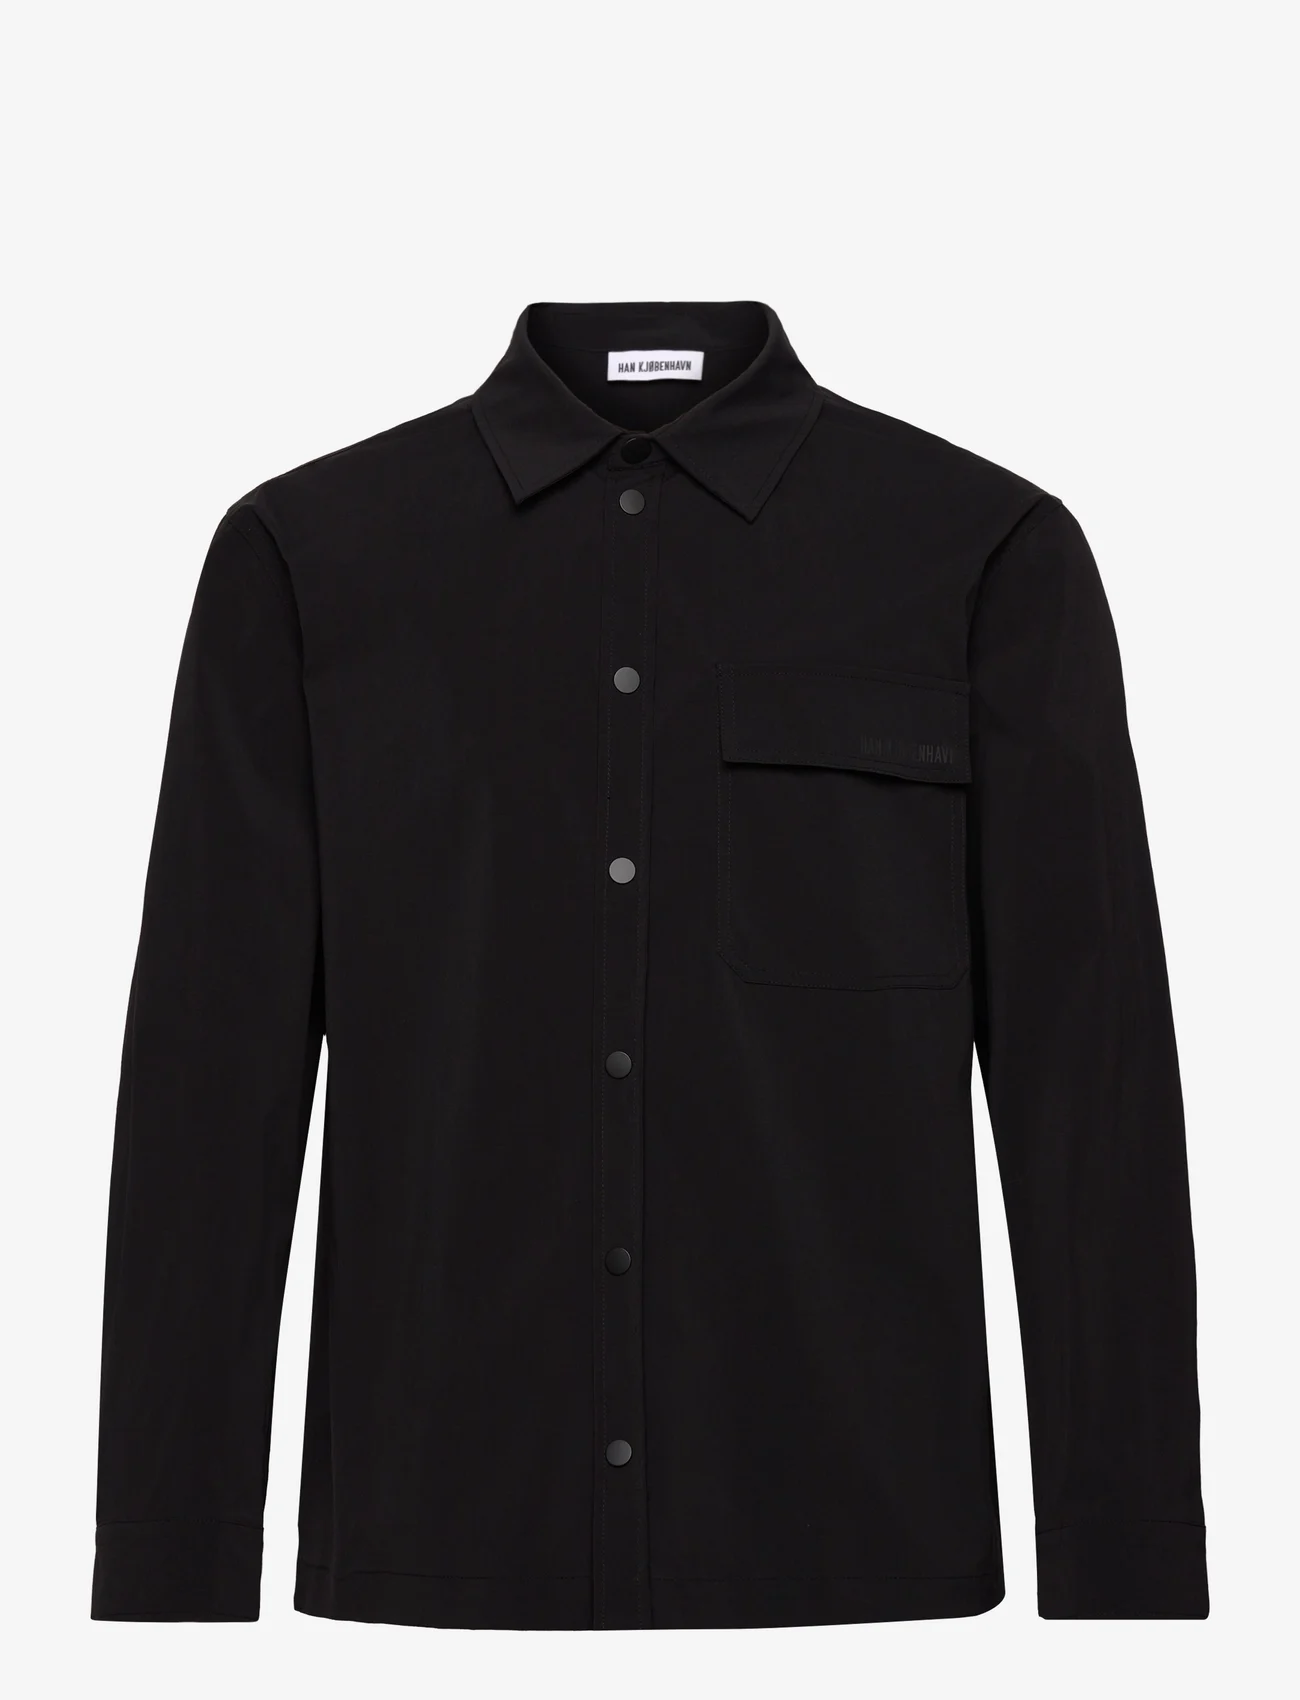 HAN Kjøbenhavn - Nylon Patch Pocket Shirt Long Sleeve - mehed - black - 0